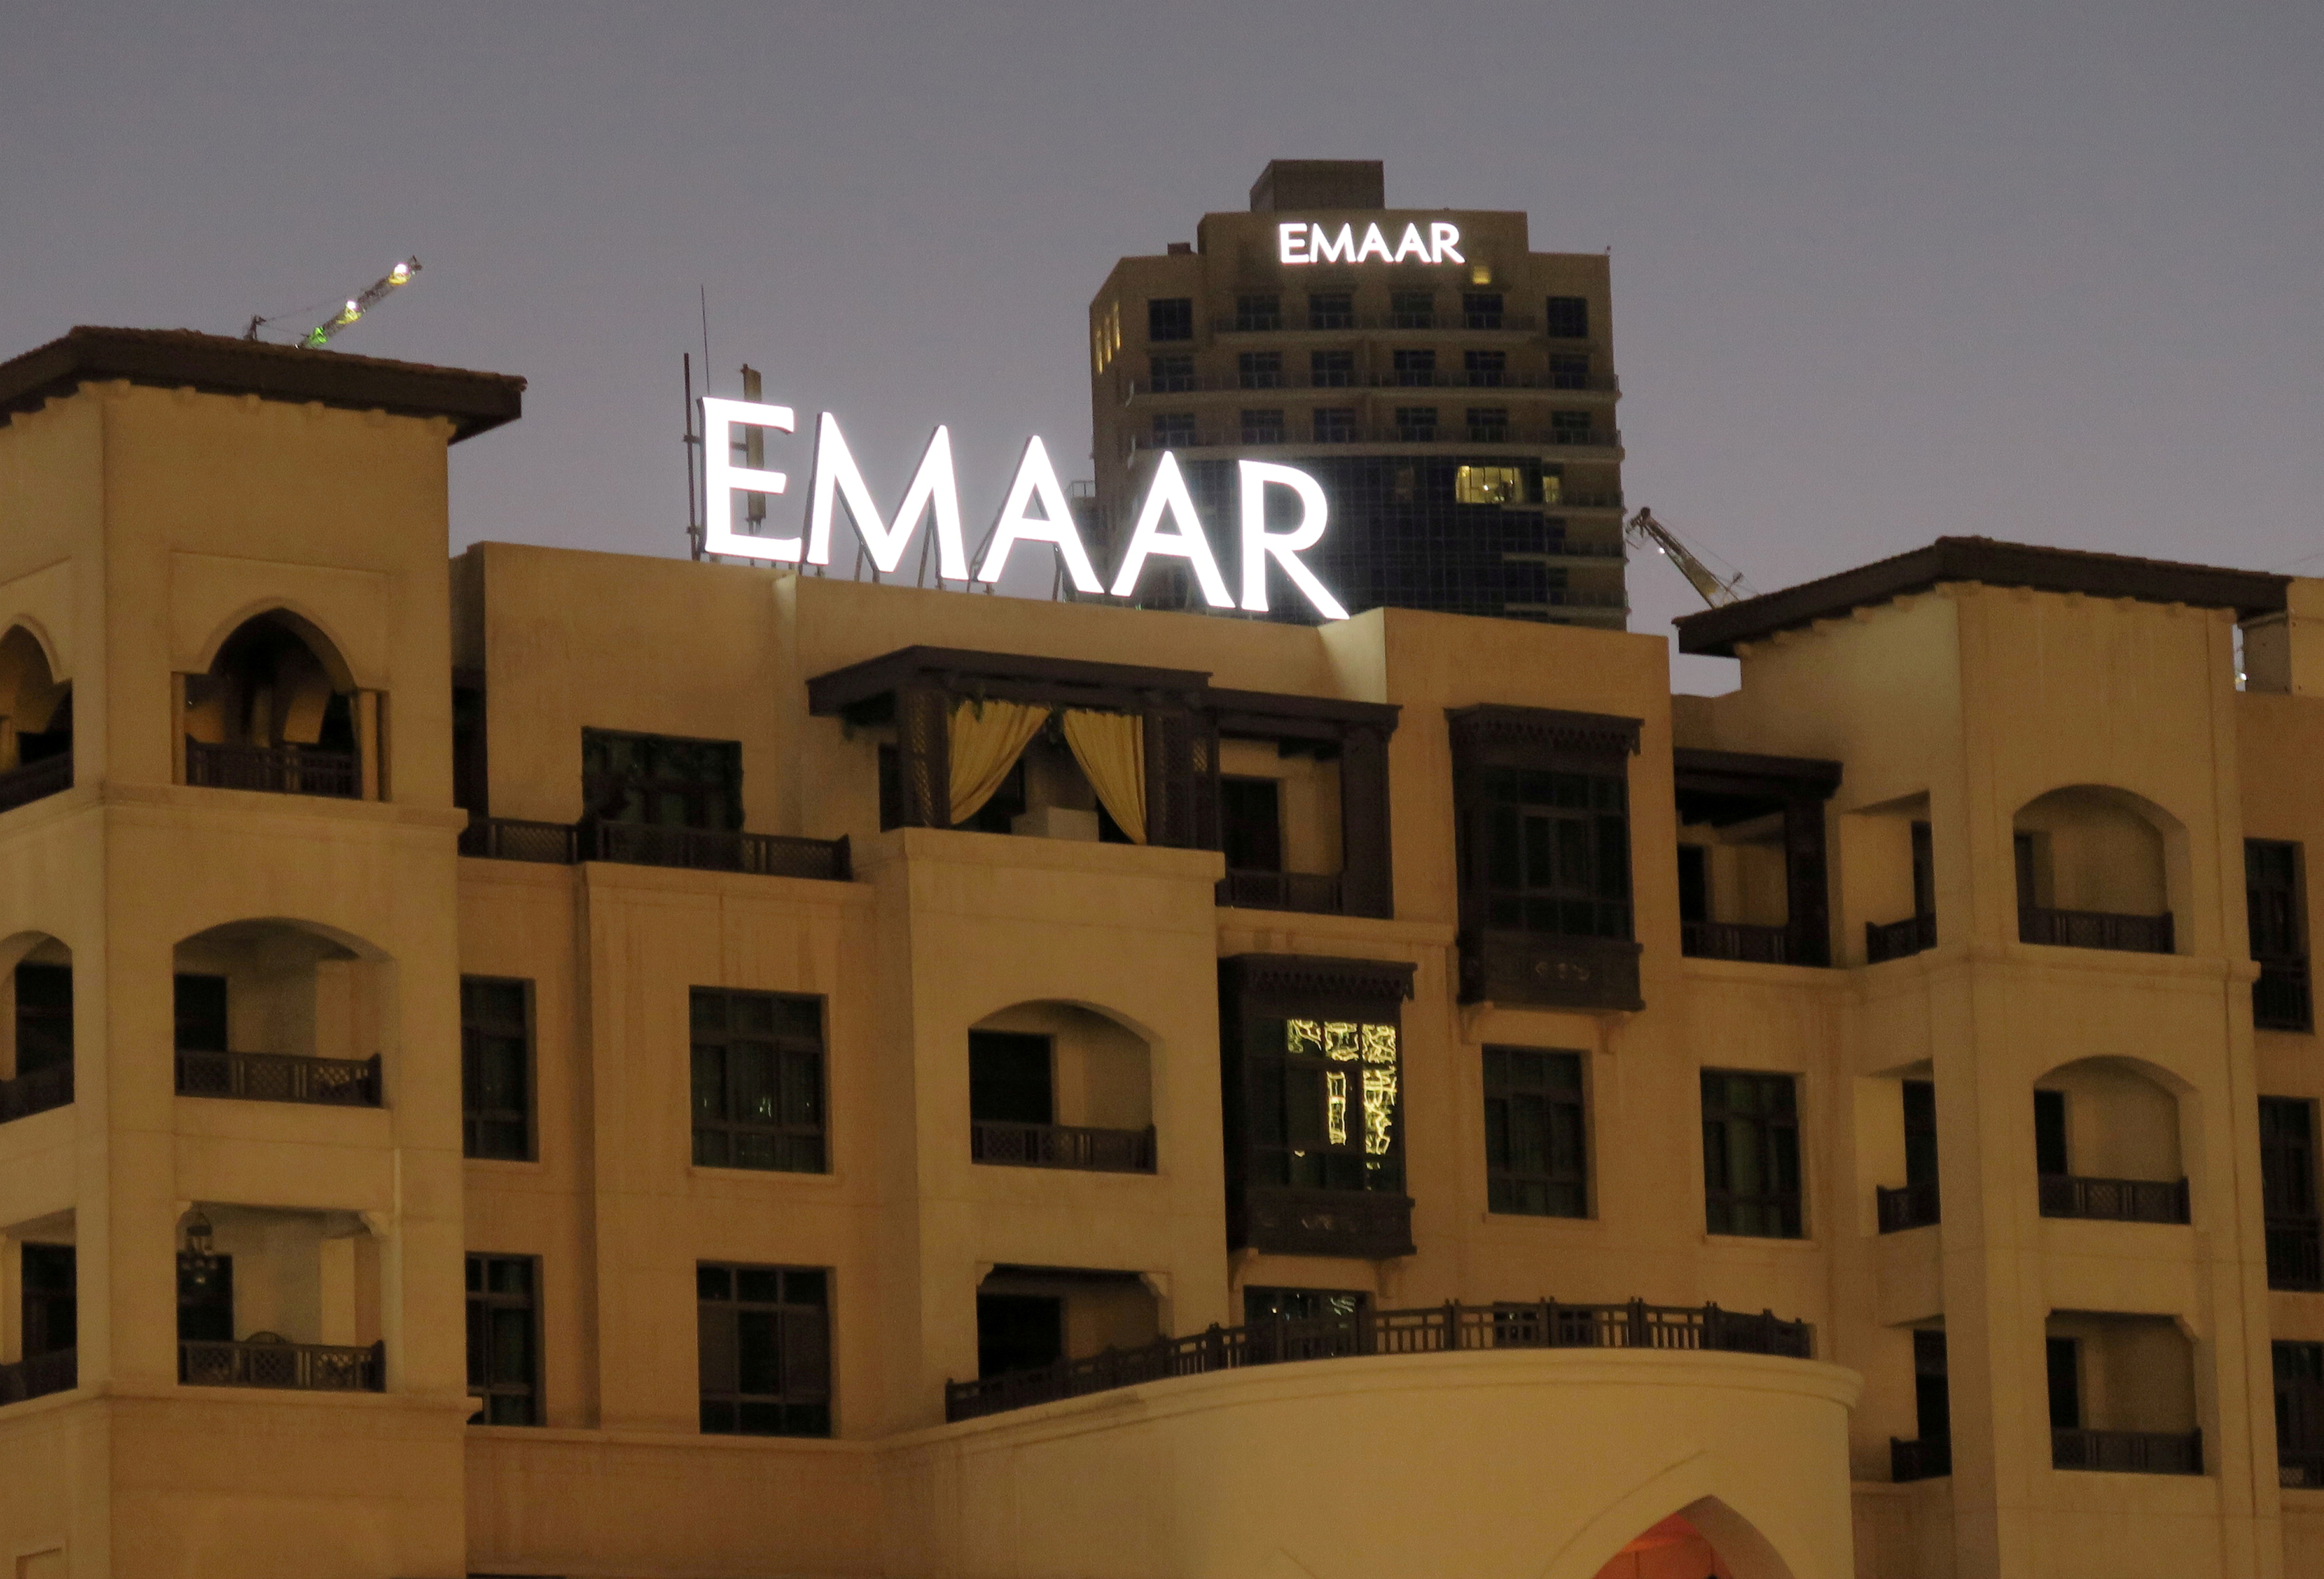 The logo of Dubai's Emaar Properties is seen on a building in Dubai